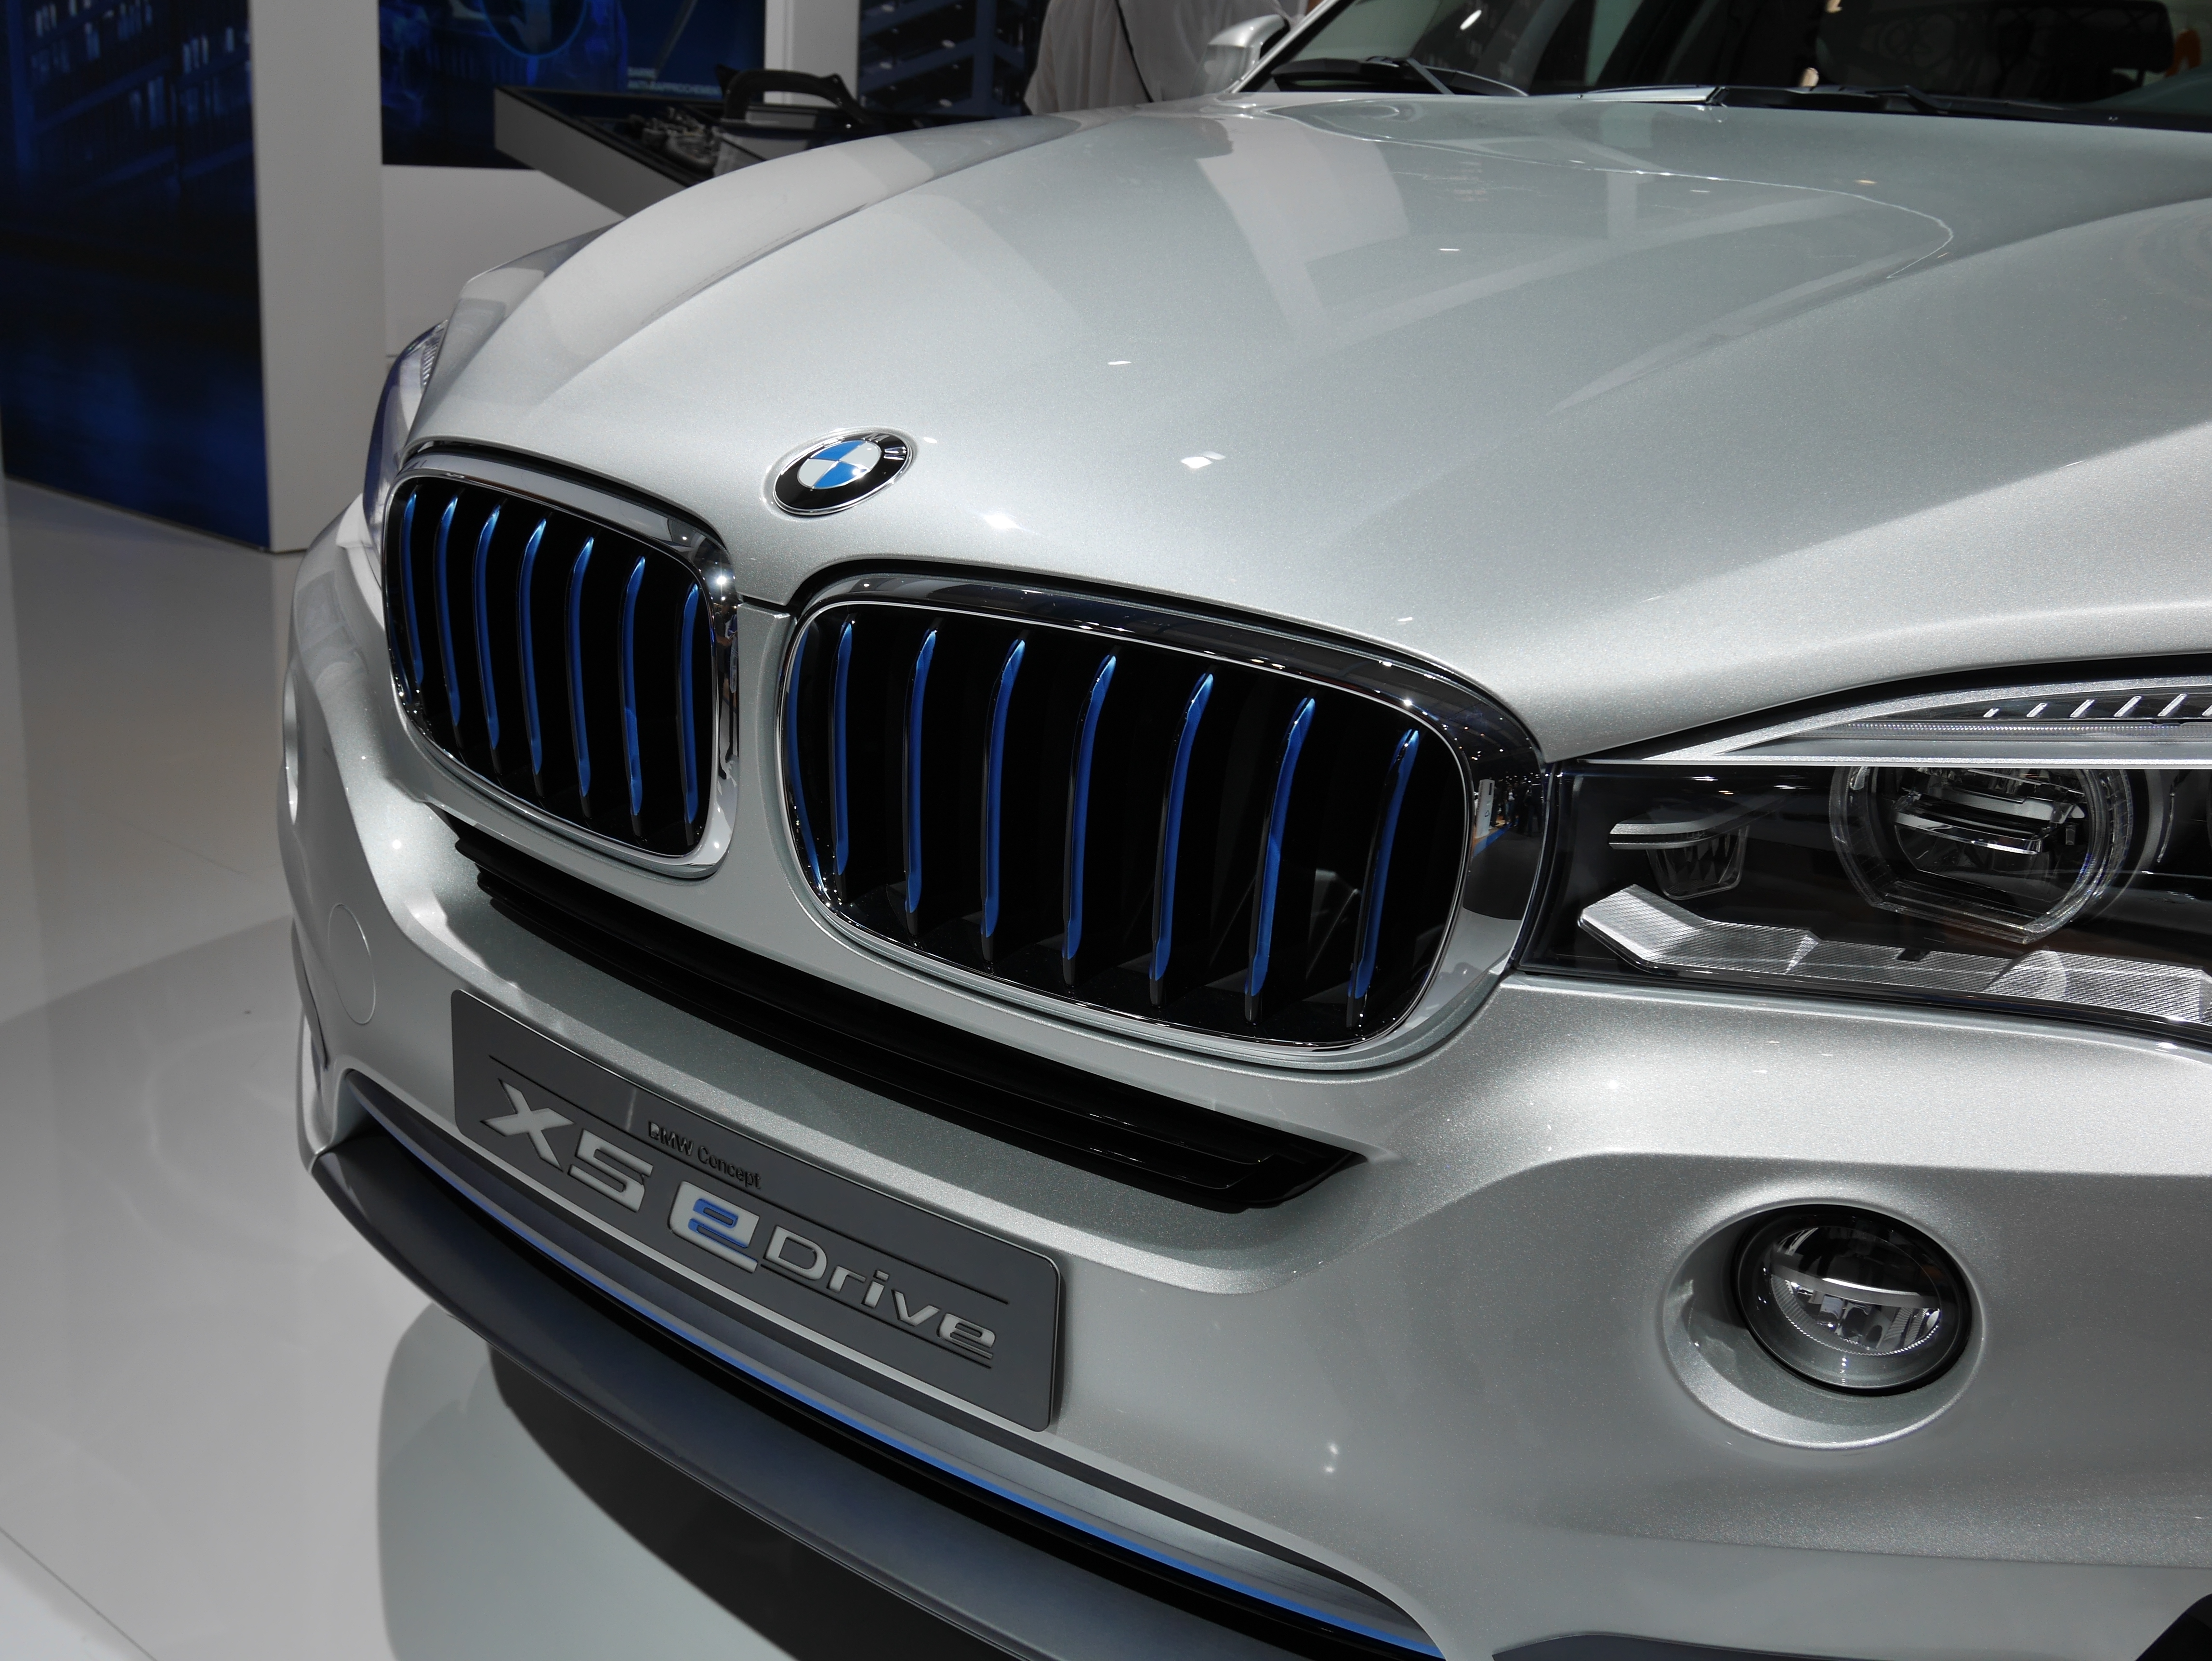 File:BMW X5 eDrive front.jpg - Wikimedia Commons